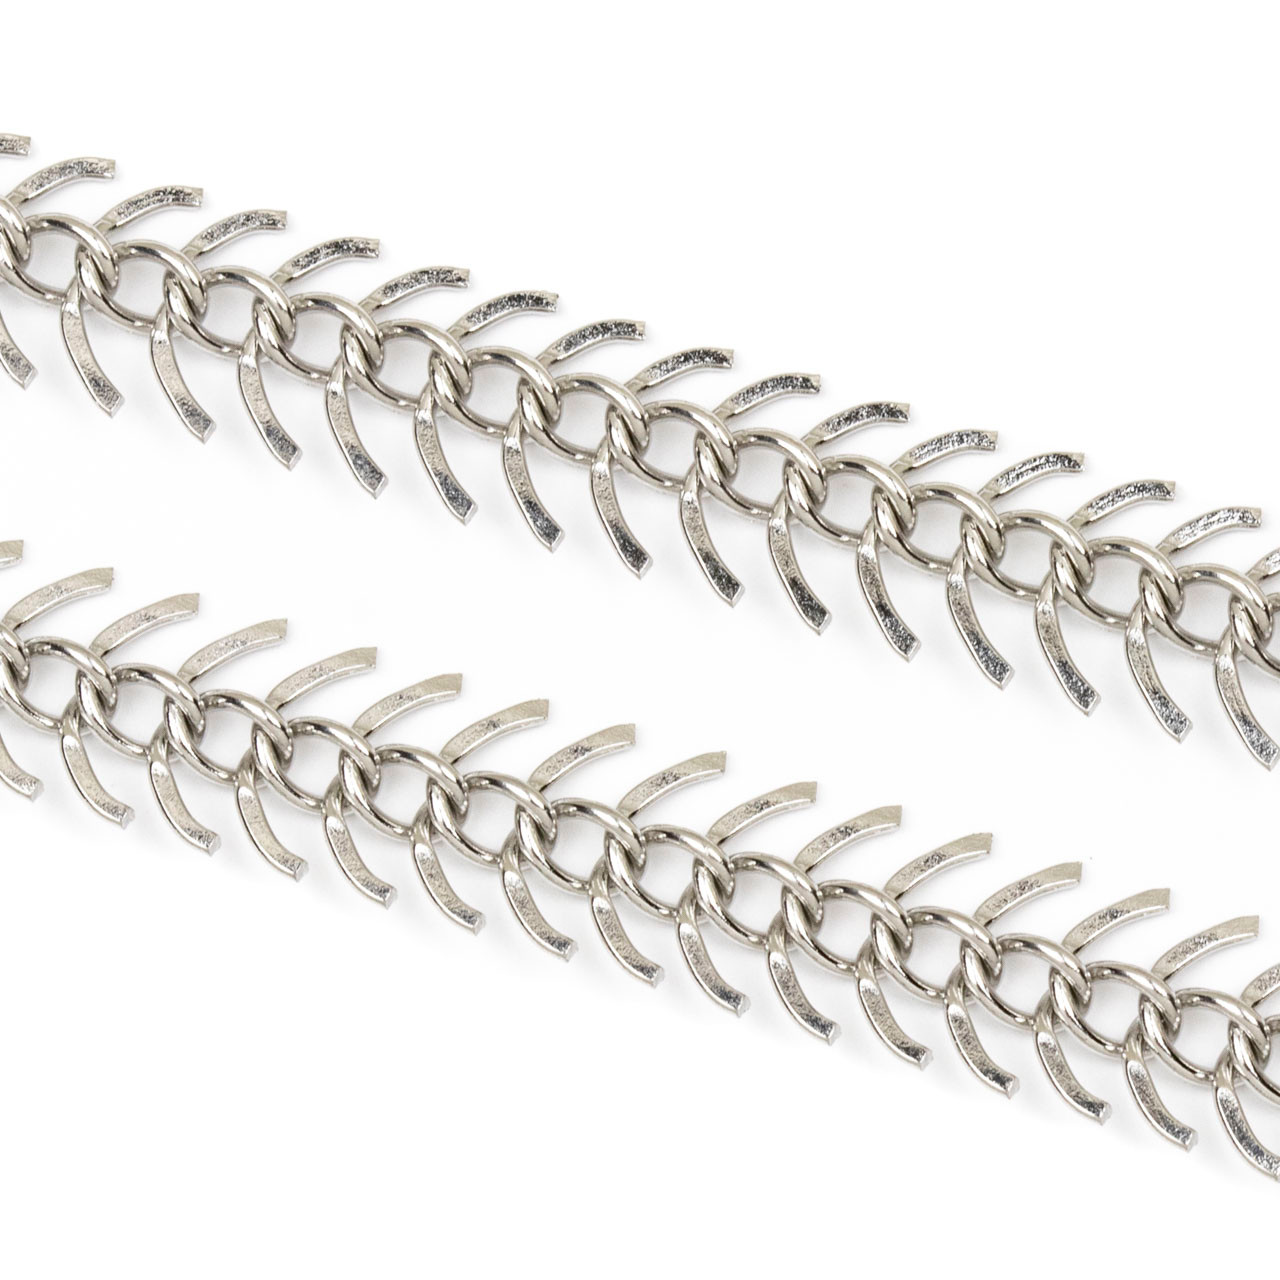 Wholesale Jewelry Website Stainless Steel Diamond Cut Curb Chain Bracelet 5mm / 8